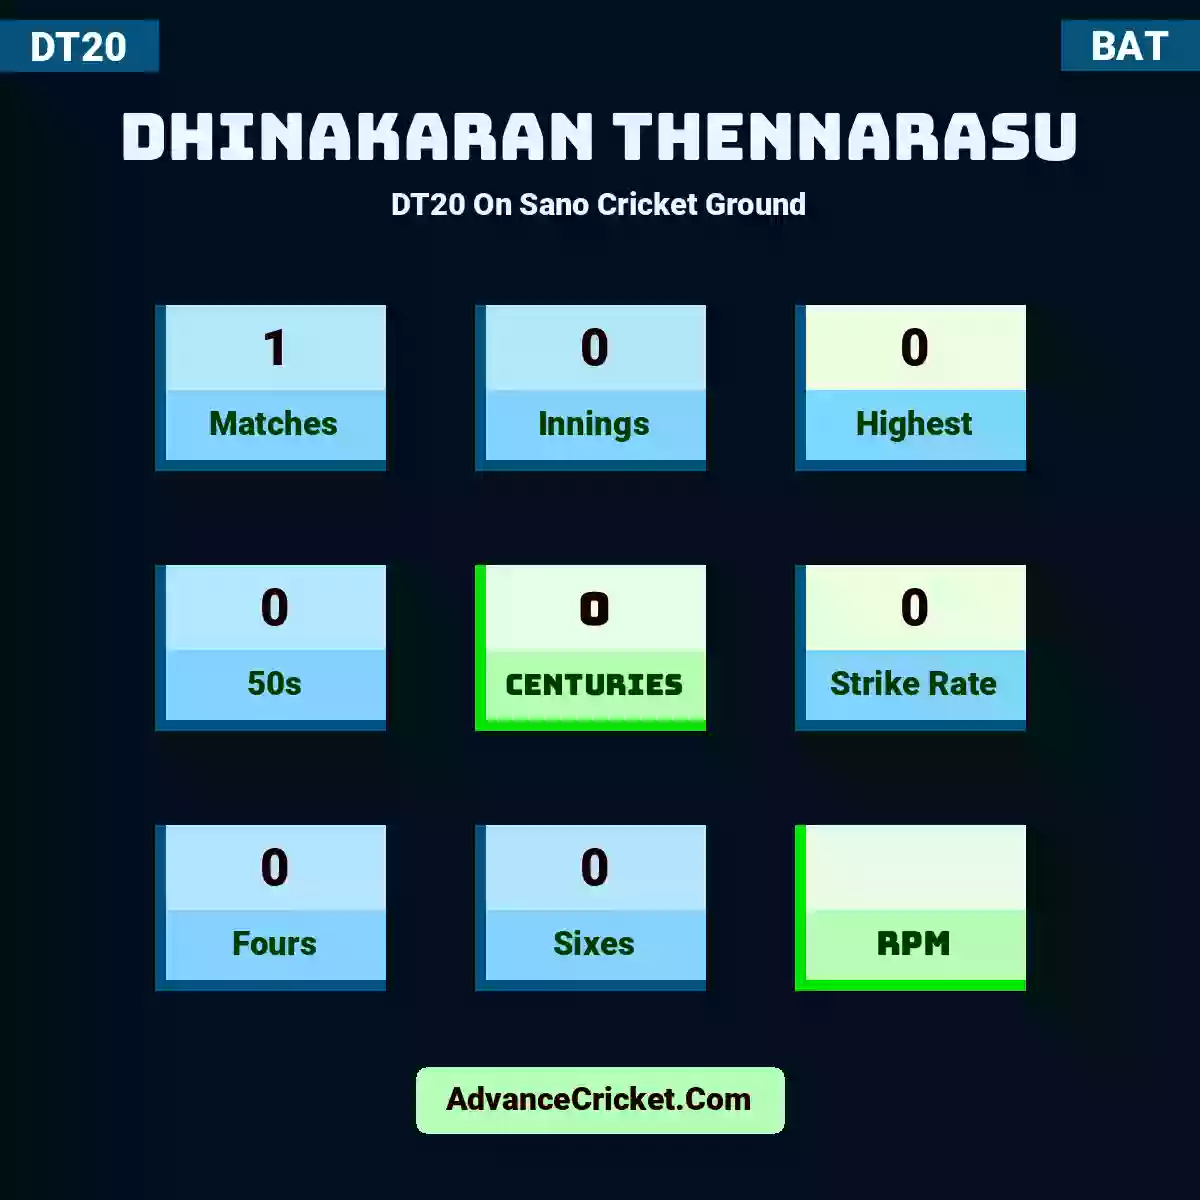 Dhinakaran Thennarasu DT20  On Sano Cricket Ground, Dhinakaran Thennarasu played 1 matches, scored 0 runs as highest, 0 half-centuries, and 0 centuries, with a strike rate of 0. D.Thennarasu hit 0 fours and 0 sixes.